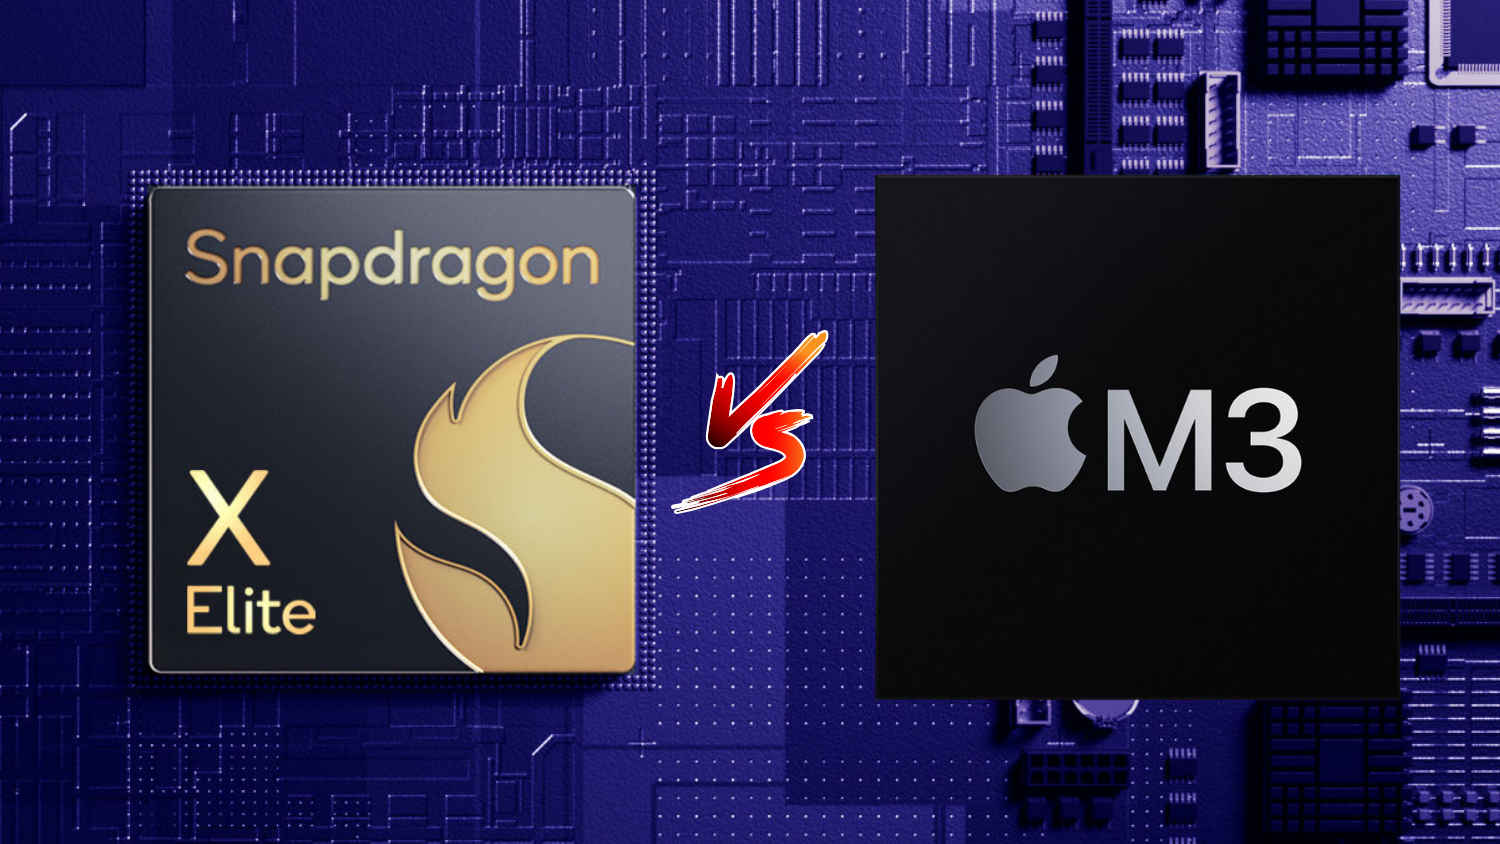 Snapdragon X Elite powered laptops will beat Apple’s M3 MacBook, says Microsoft